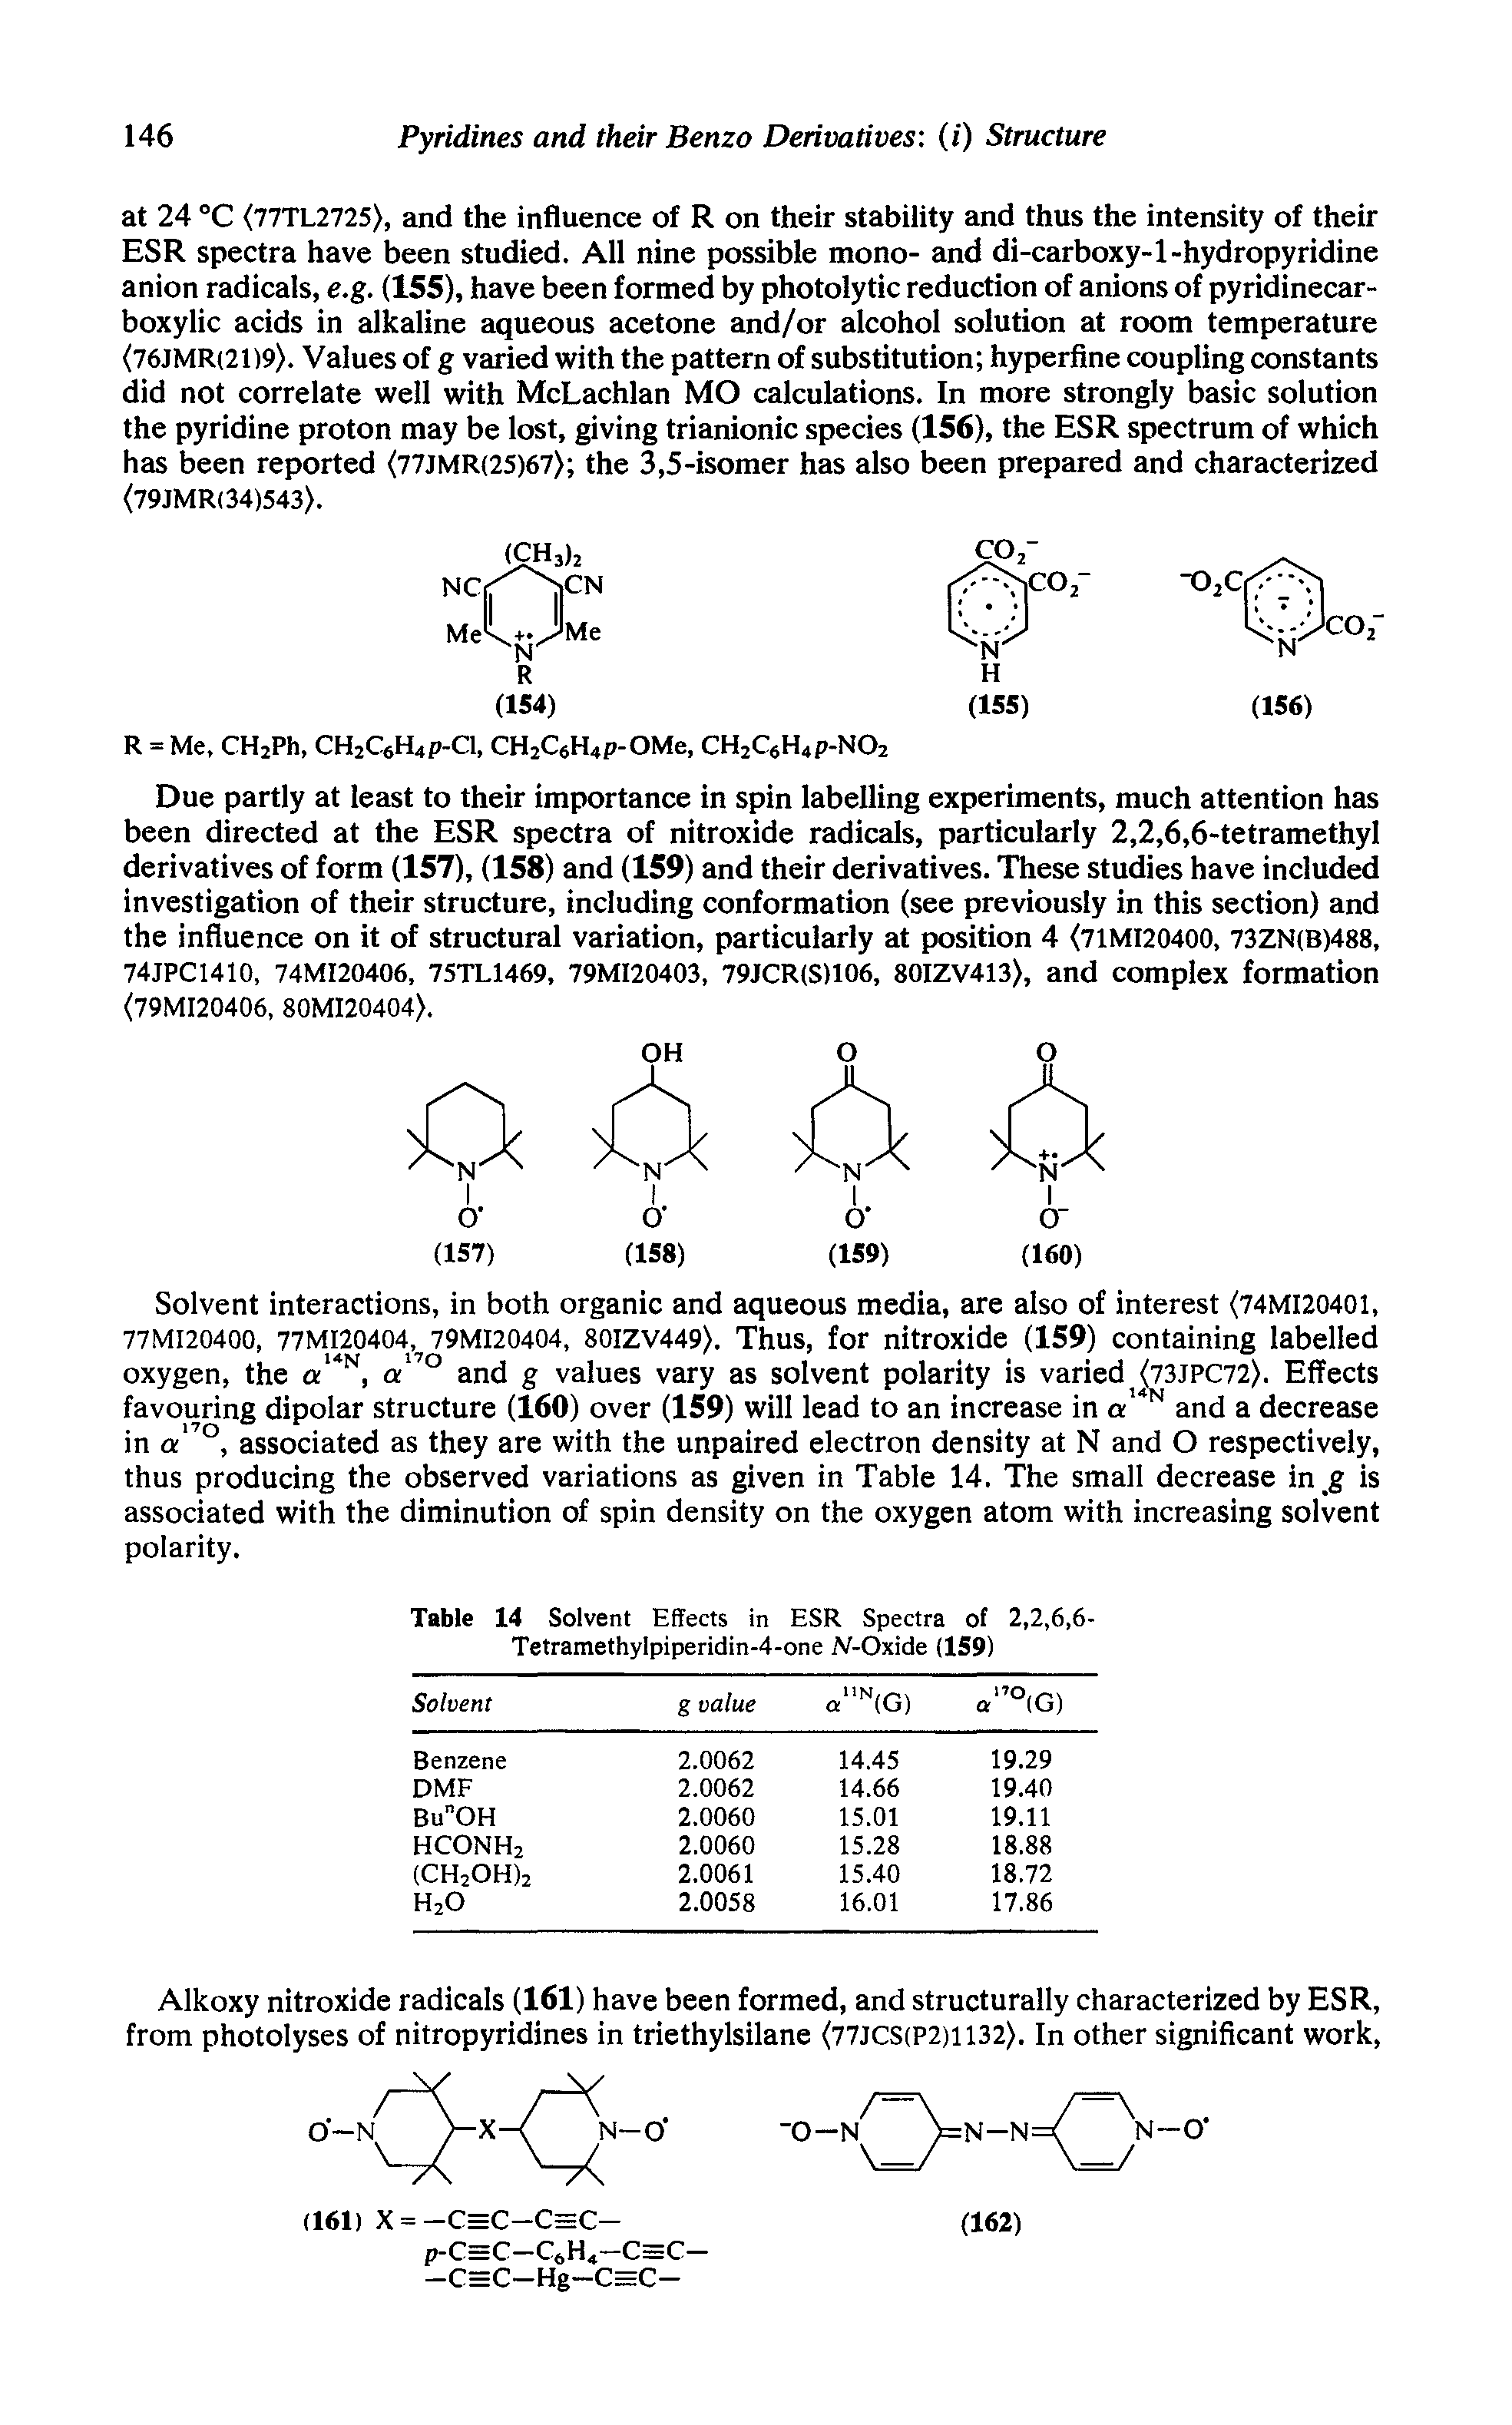 Table 14 Solvent Effects in ESR Spectra of 2,2,6,6-Tetramethylpiperidin-4-one N-Oxide (159)...